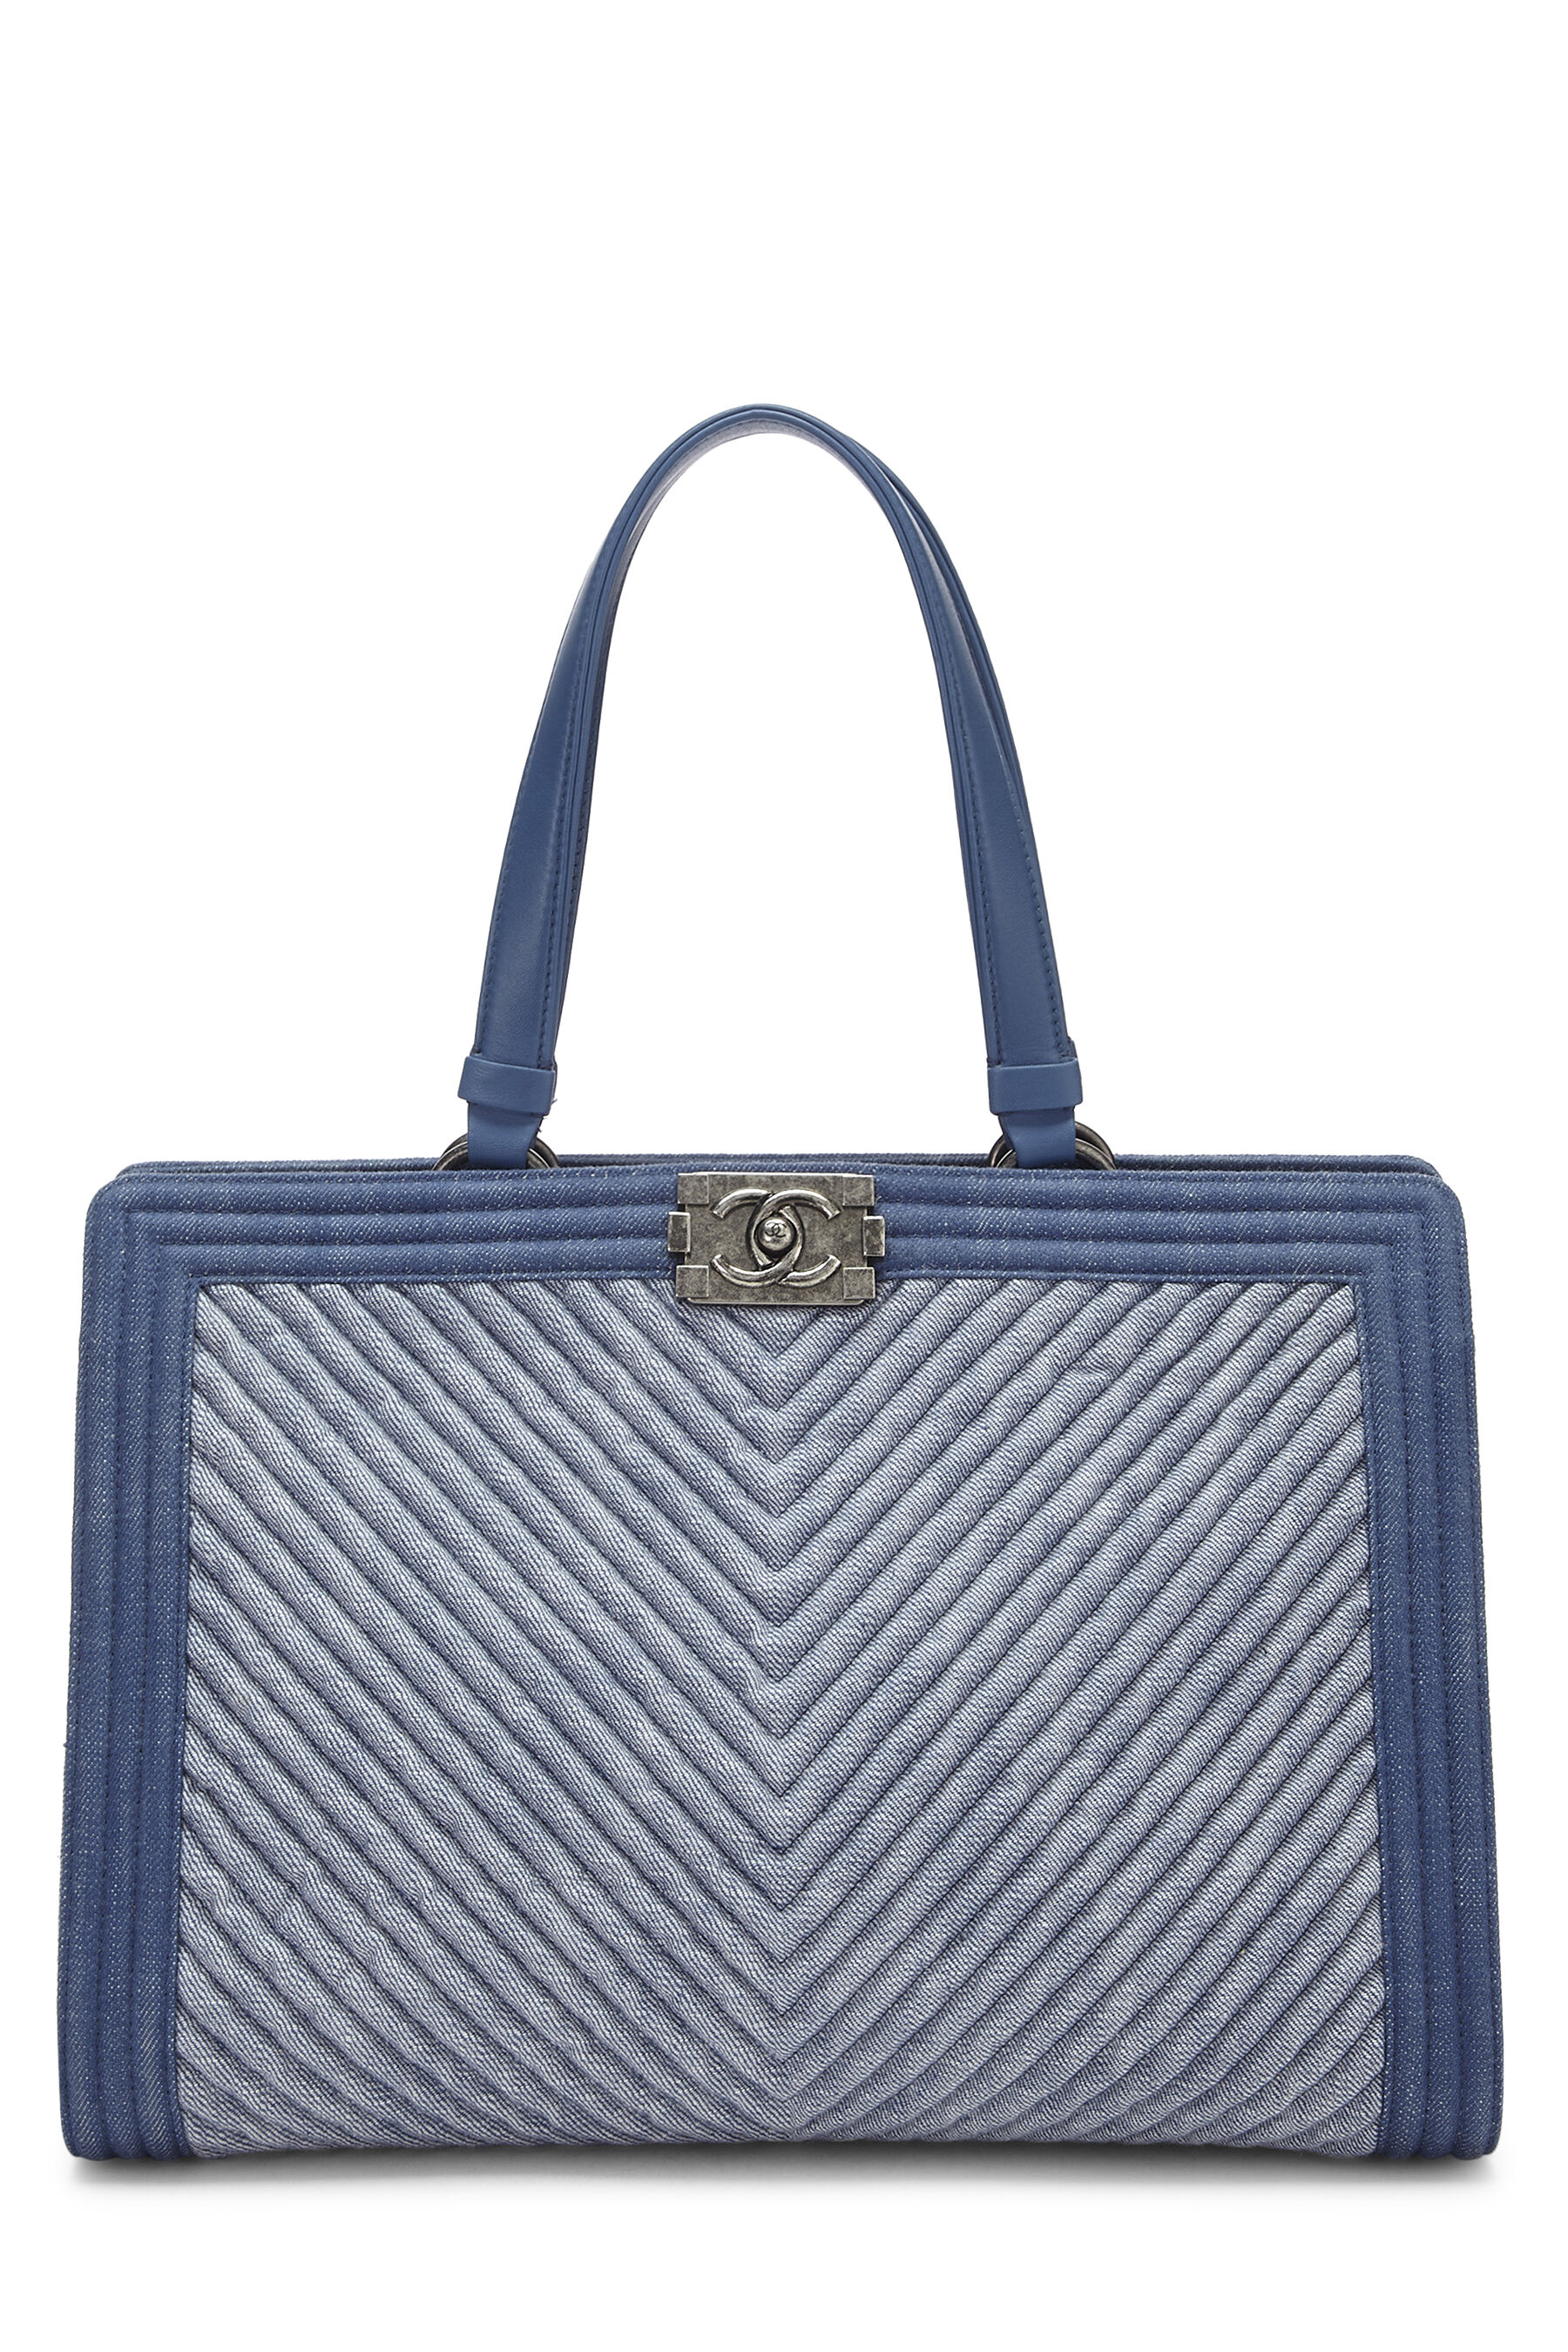 chanel blue tote handbag